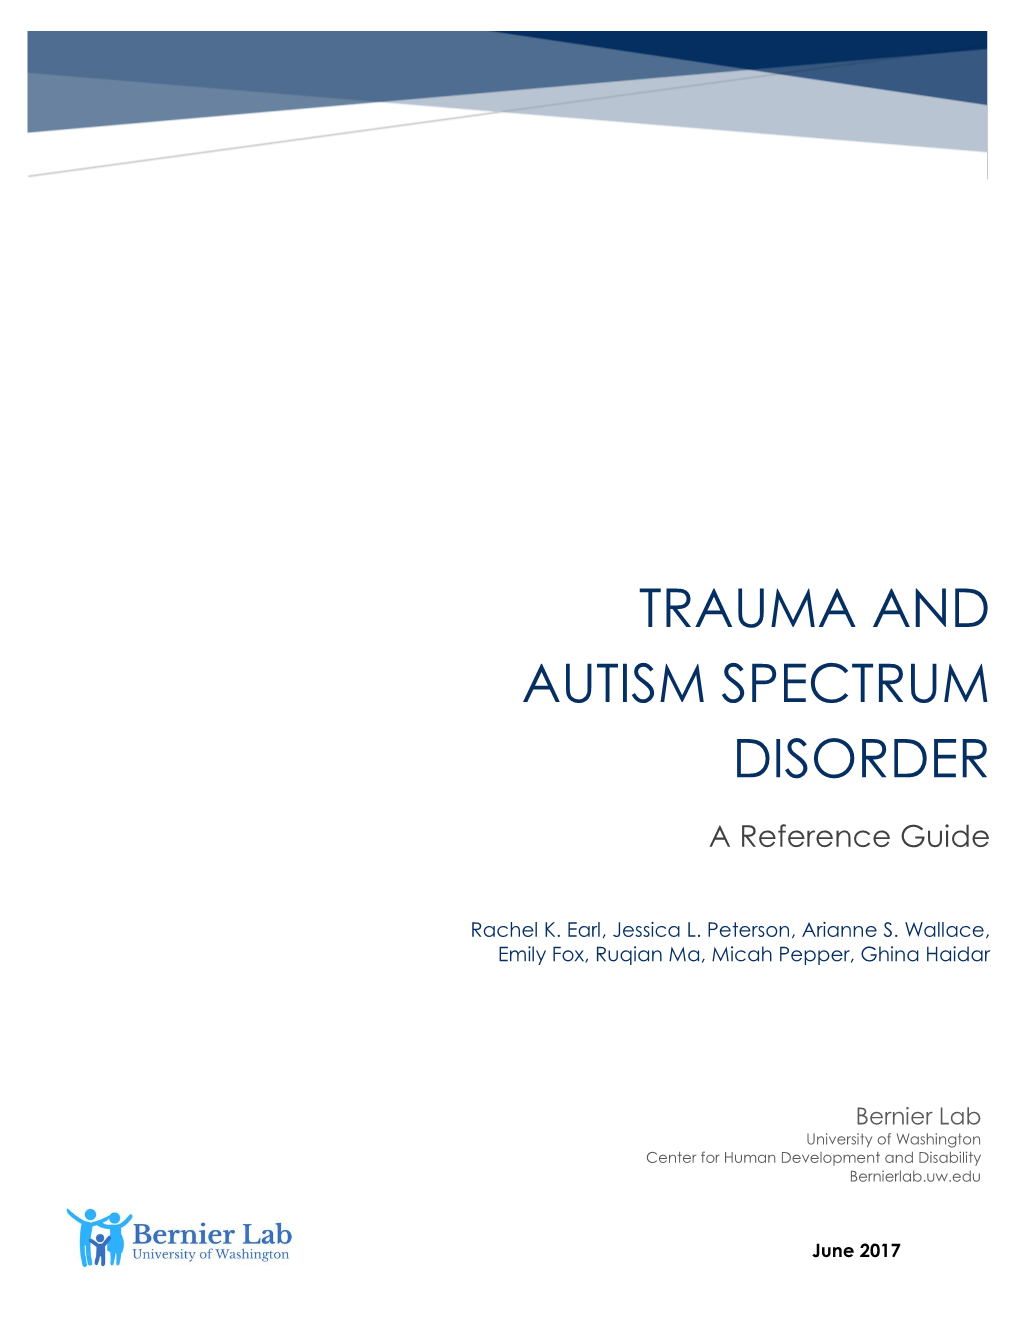 Trauma and Autism Spectrum Disorder